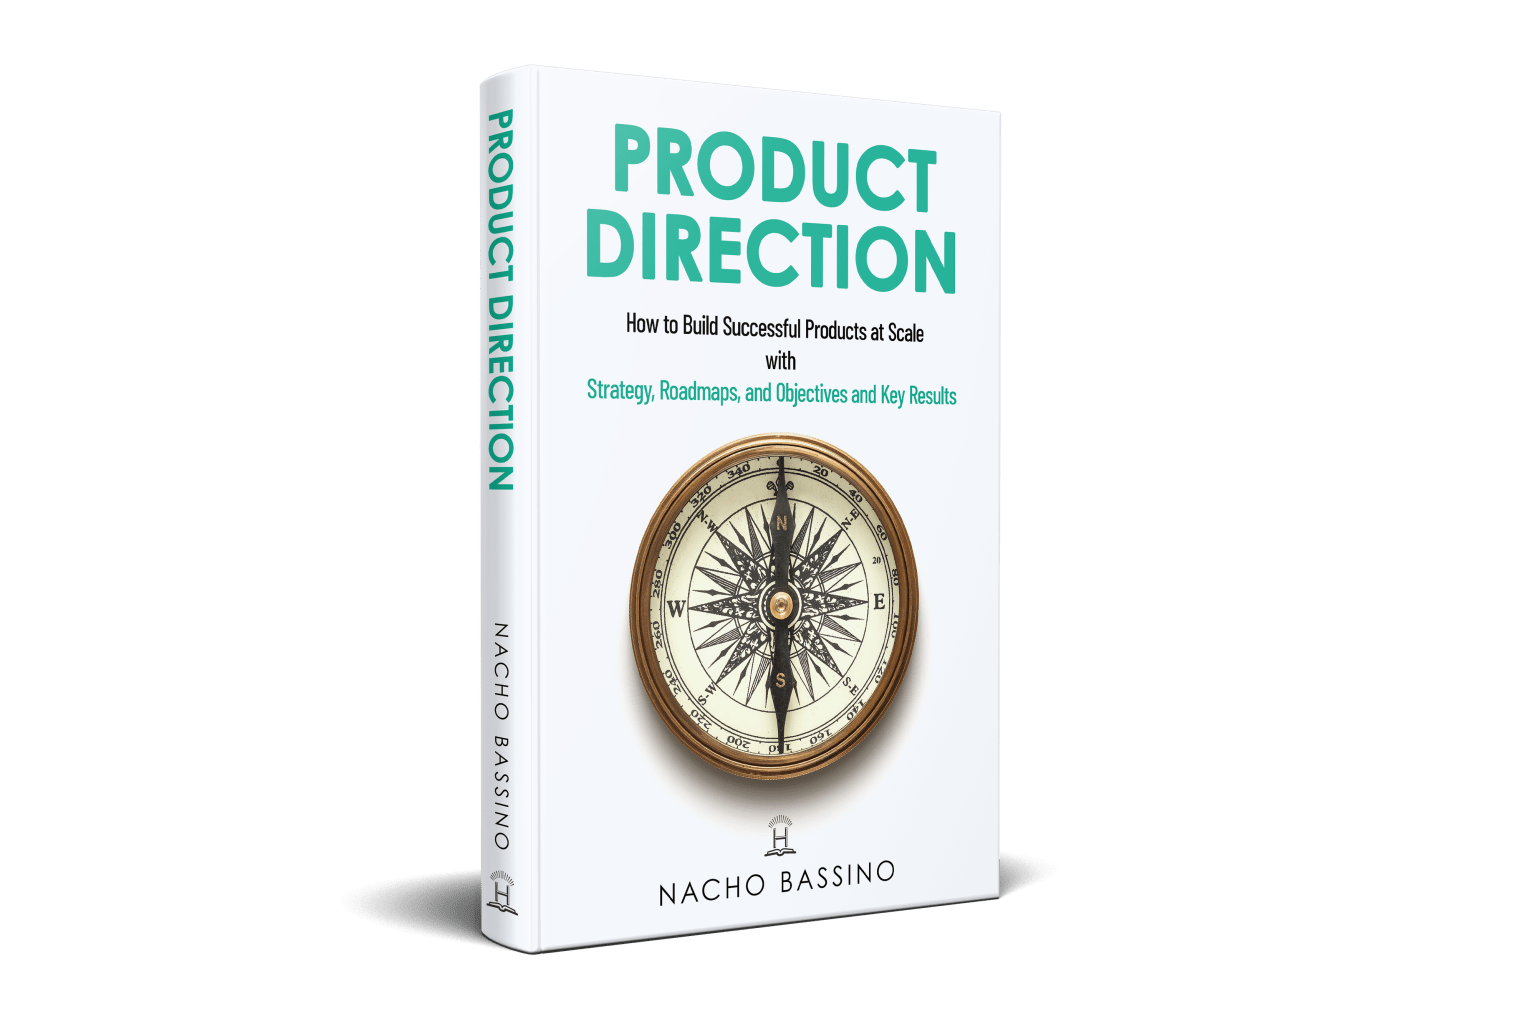 Nacho Bassino book - Product Direction